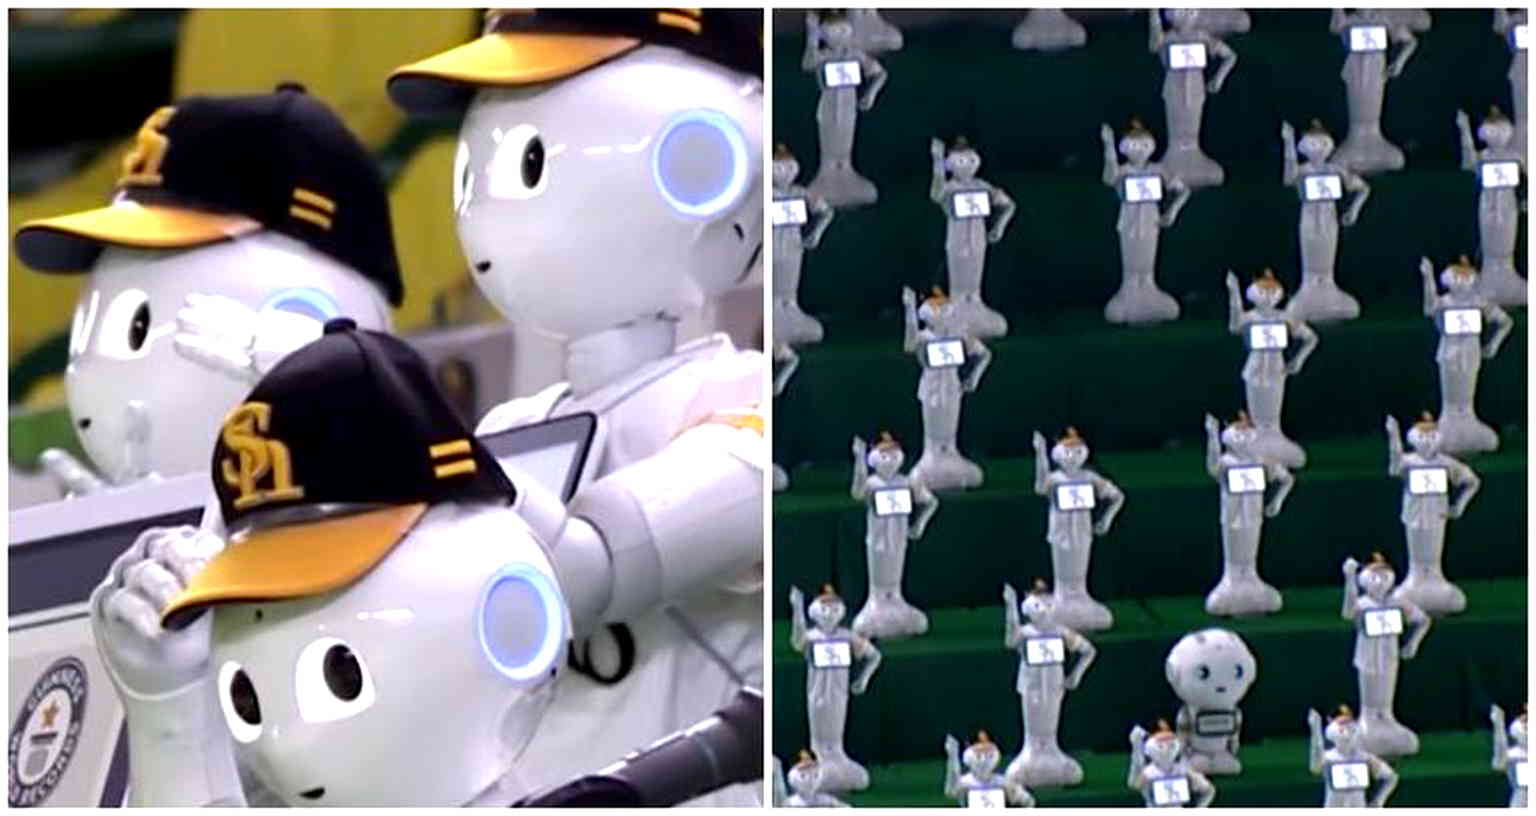 Japanese robotics company solves empty stadium dilemma with 100-humanoid-robot cheerleading squad